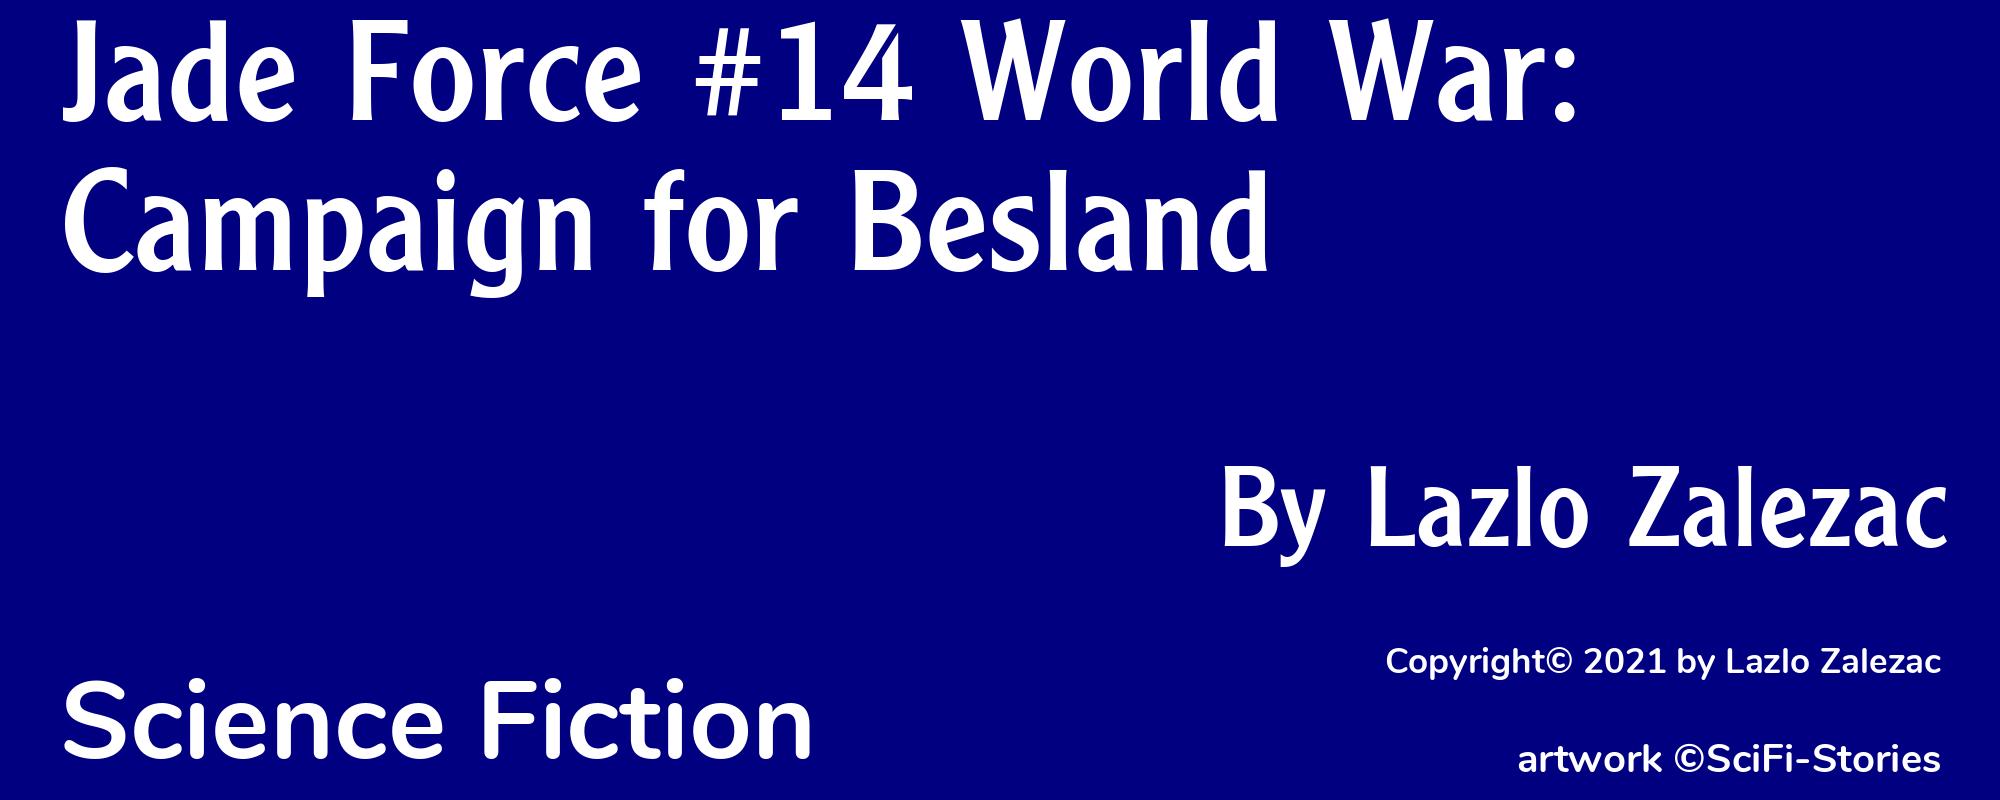 Jade Force #14 World War: Campaign for Besland - Cover